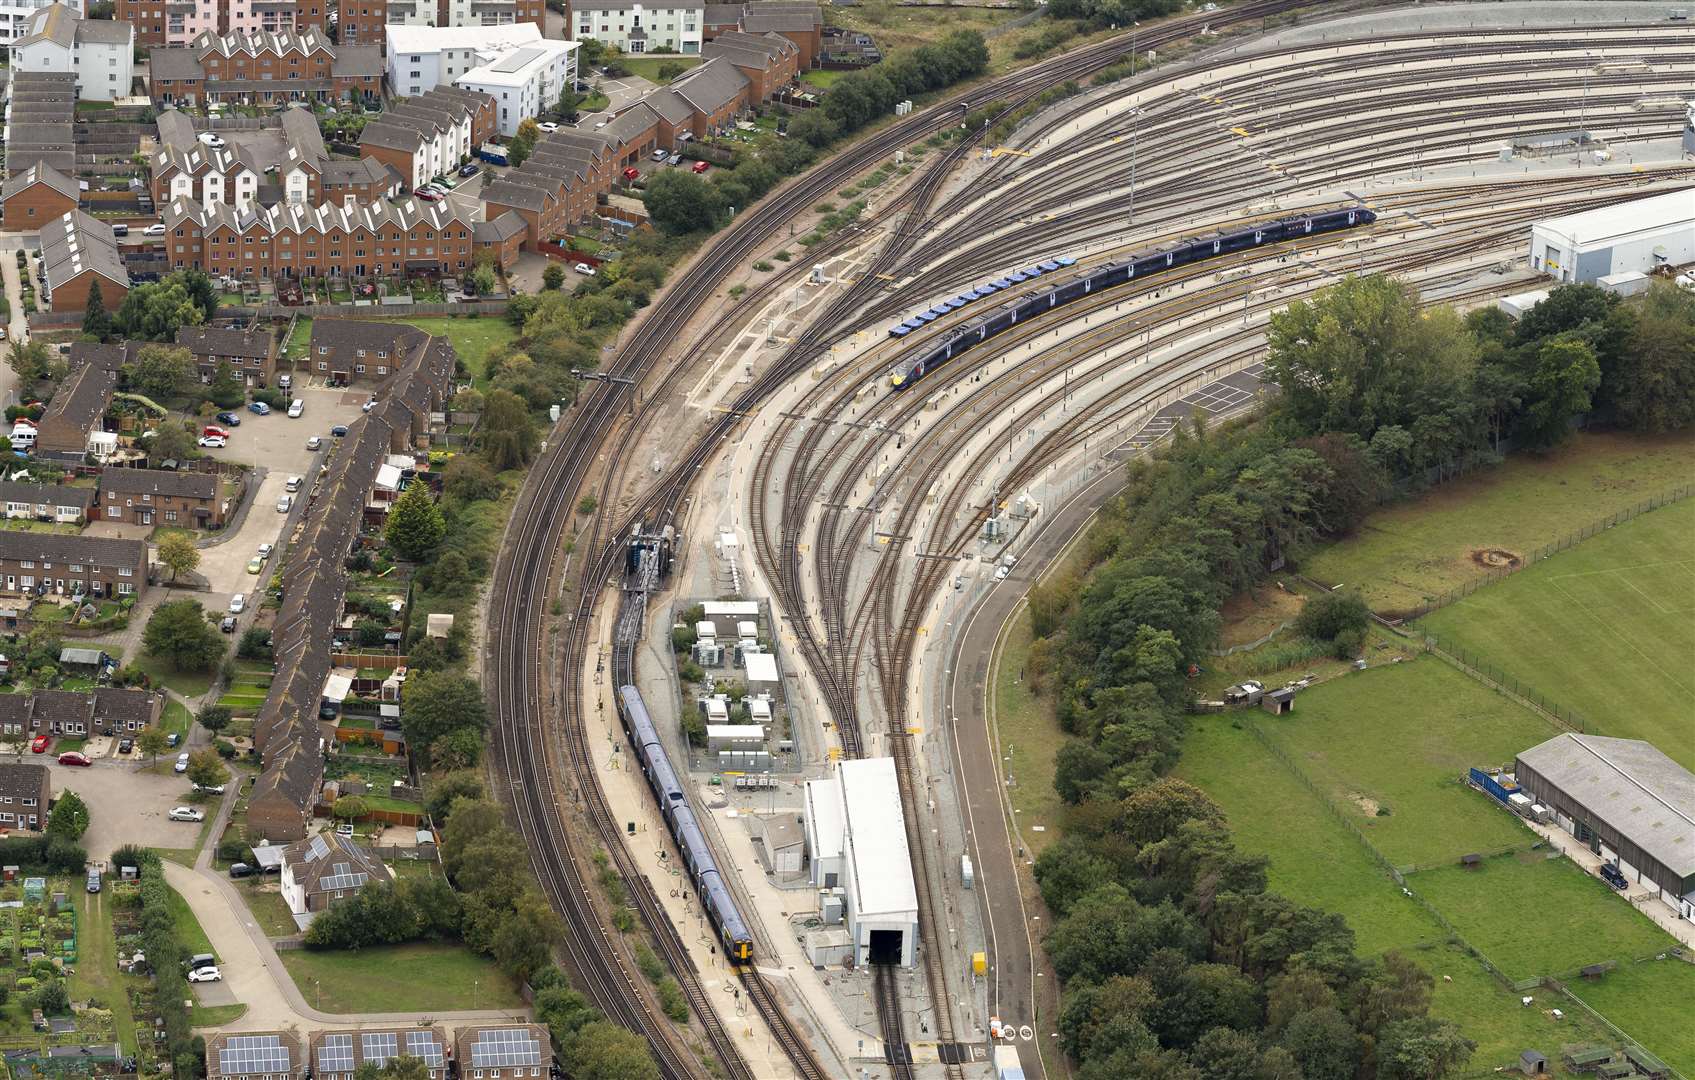 Ashford is home to a major Hitachi railway depot. Picture: Ady Kerry/Ashford Borough Council